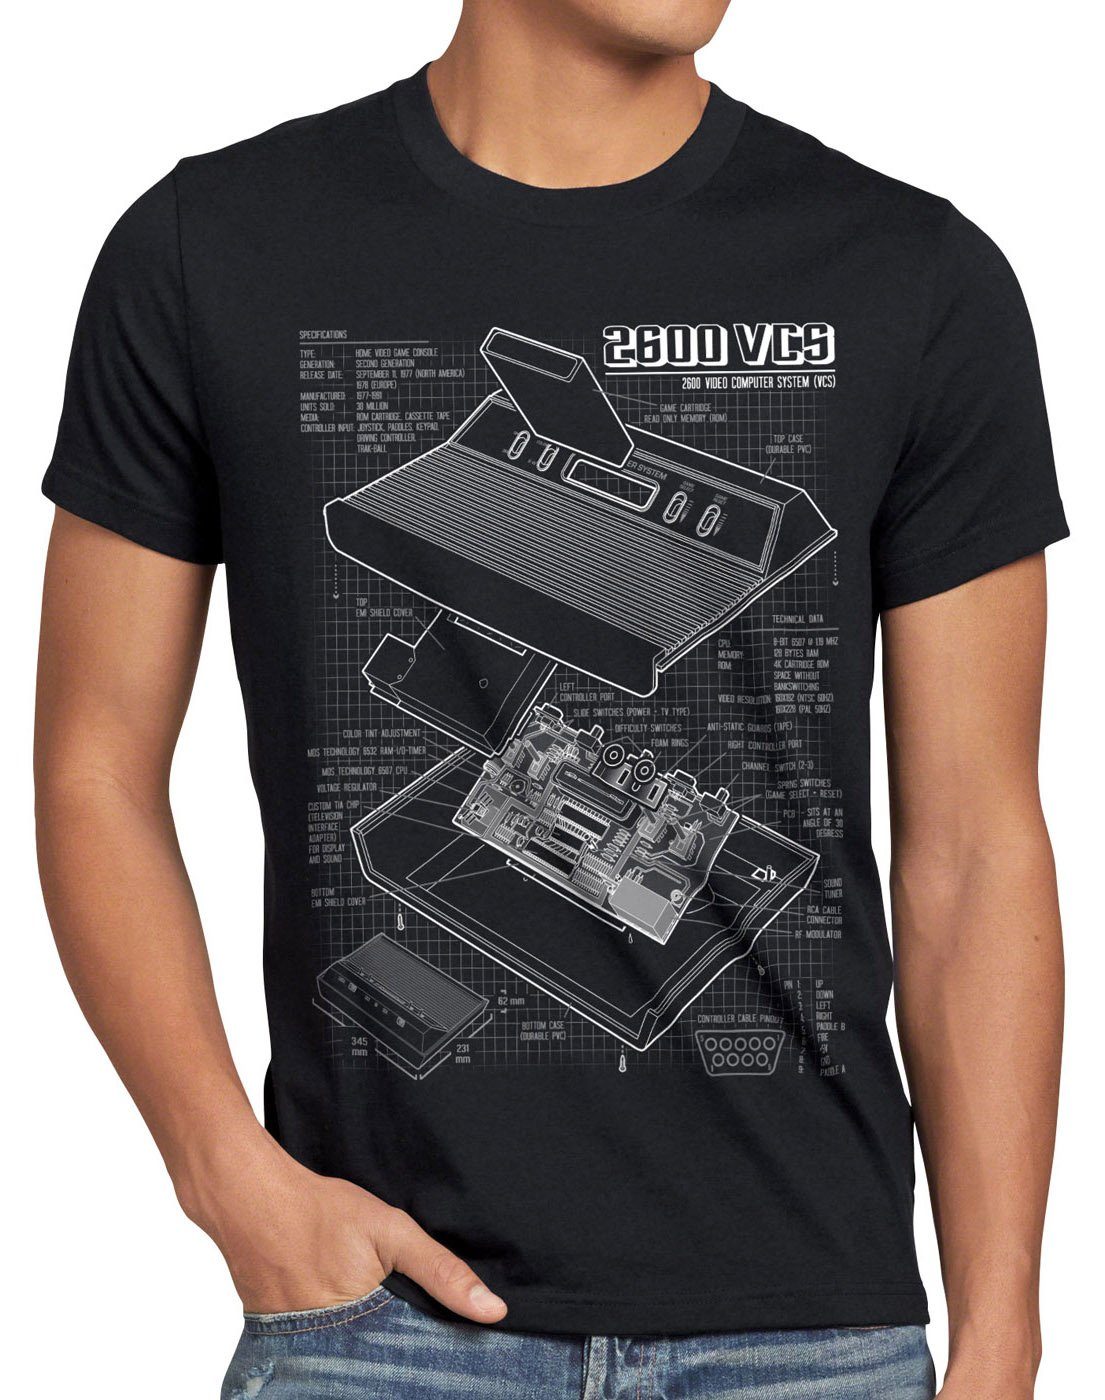 style3 Print-Shirt Herren T-Shirt VCS 2600 Heimcomputer Blaupause classic gamer schwarz